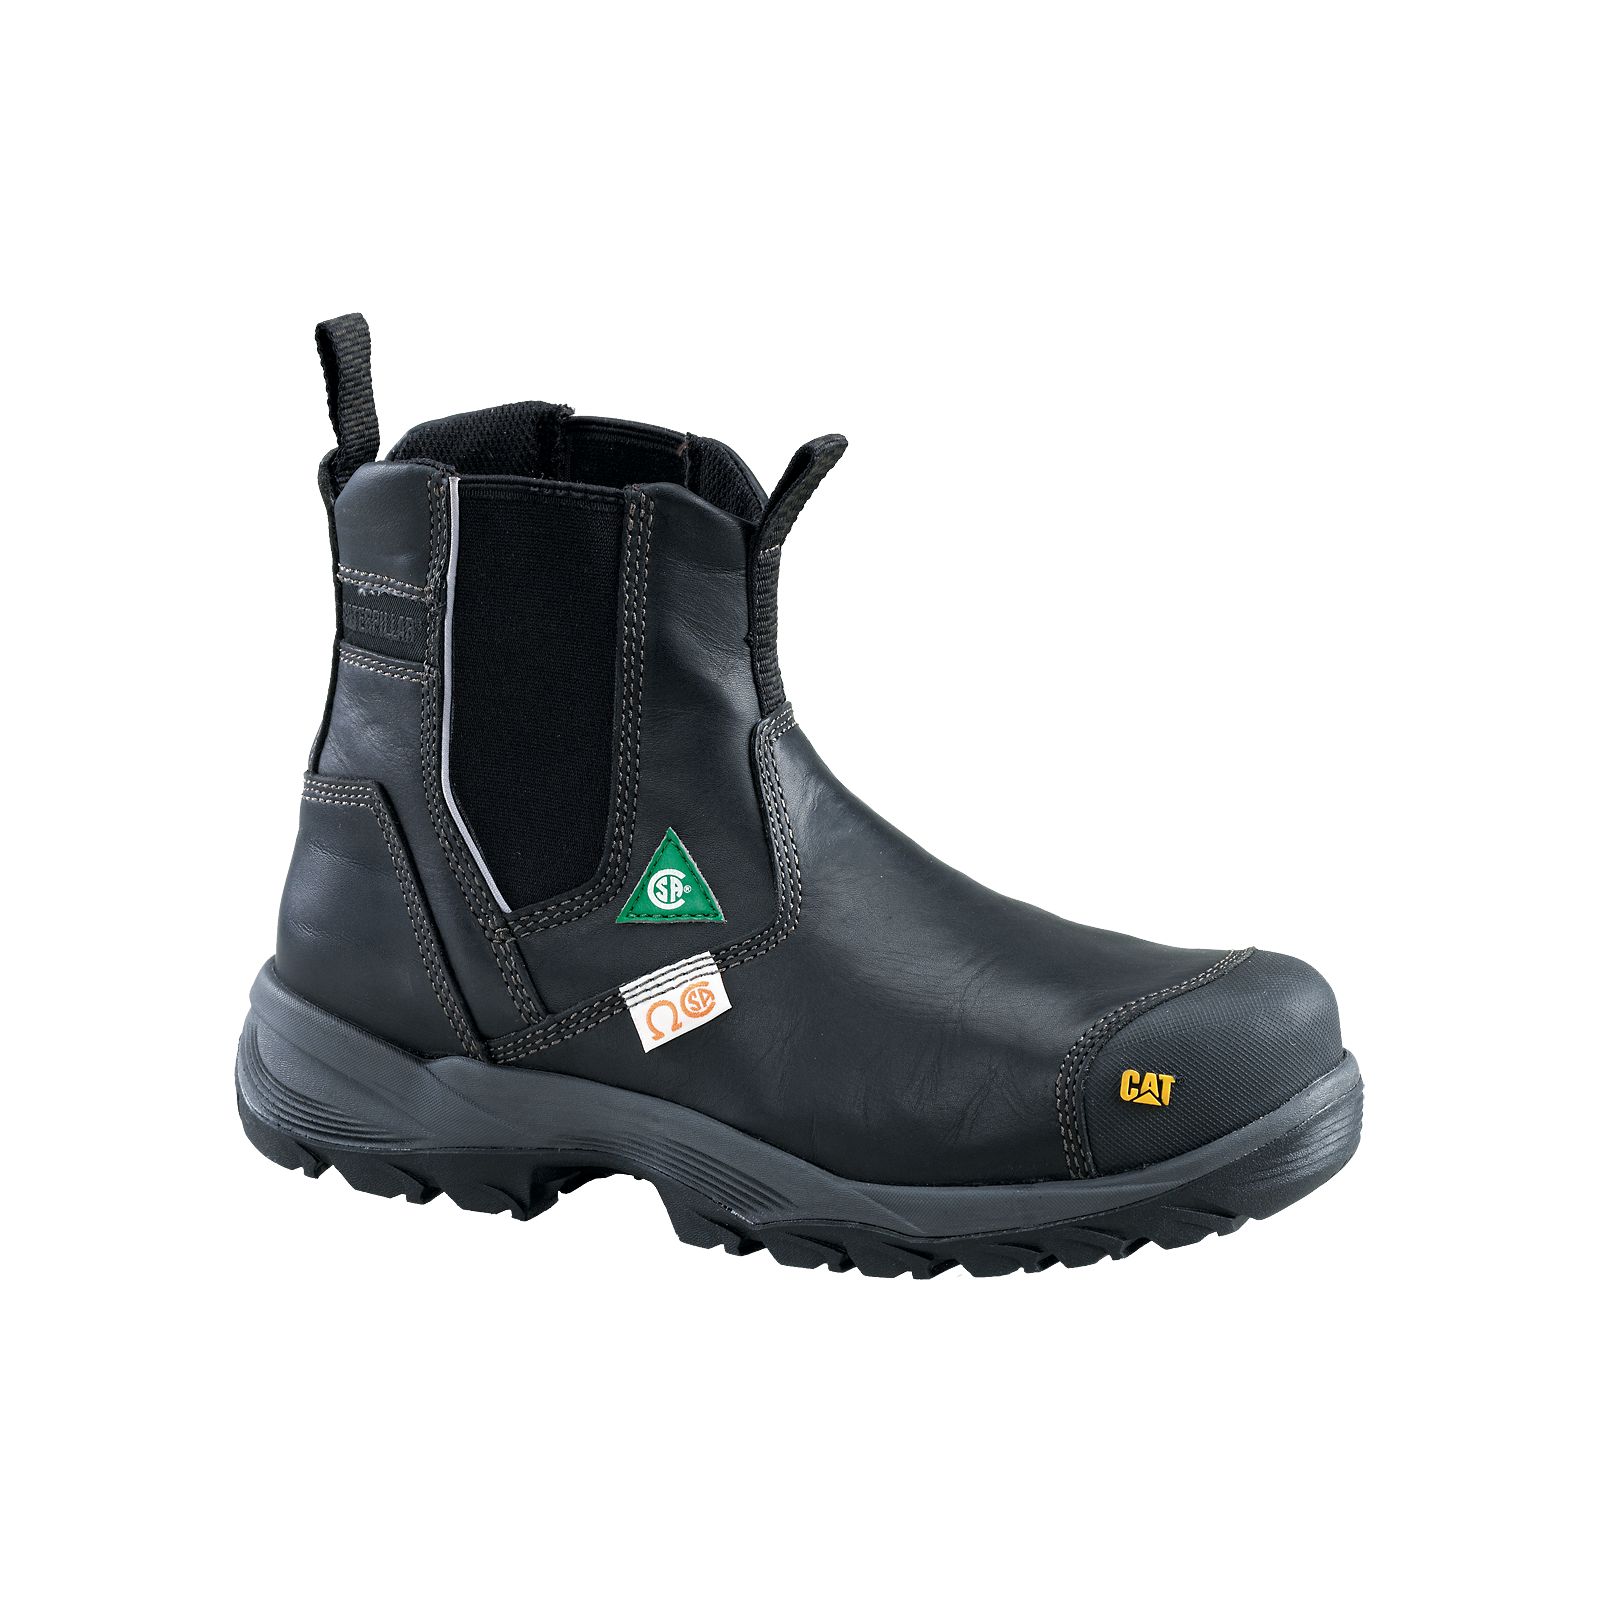 Caterpillar Boots Islamabad - Caterpillar Propane Csa Mens Work Boots Black (923481-RKM)